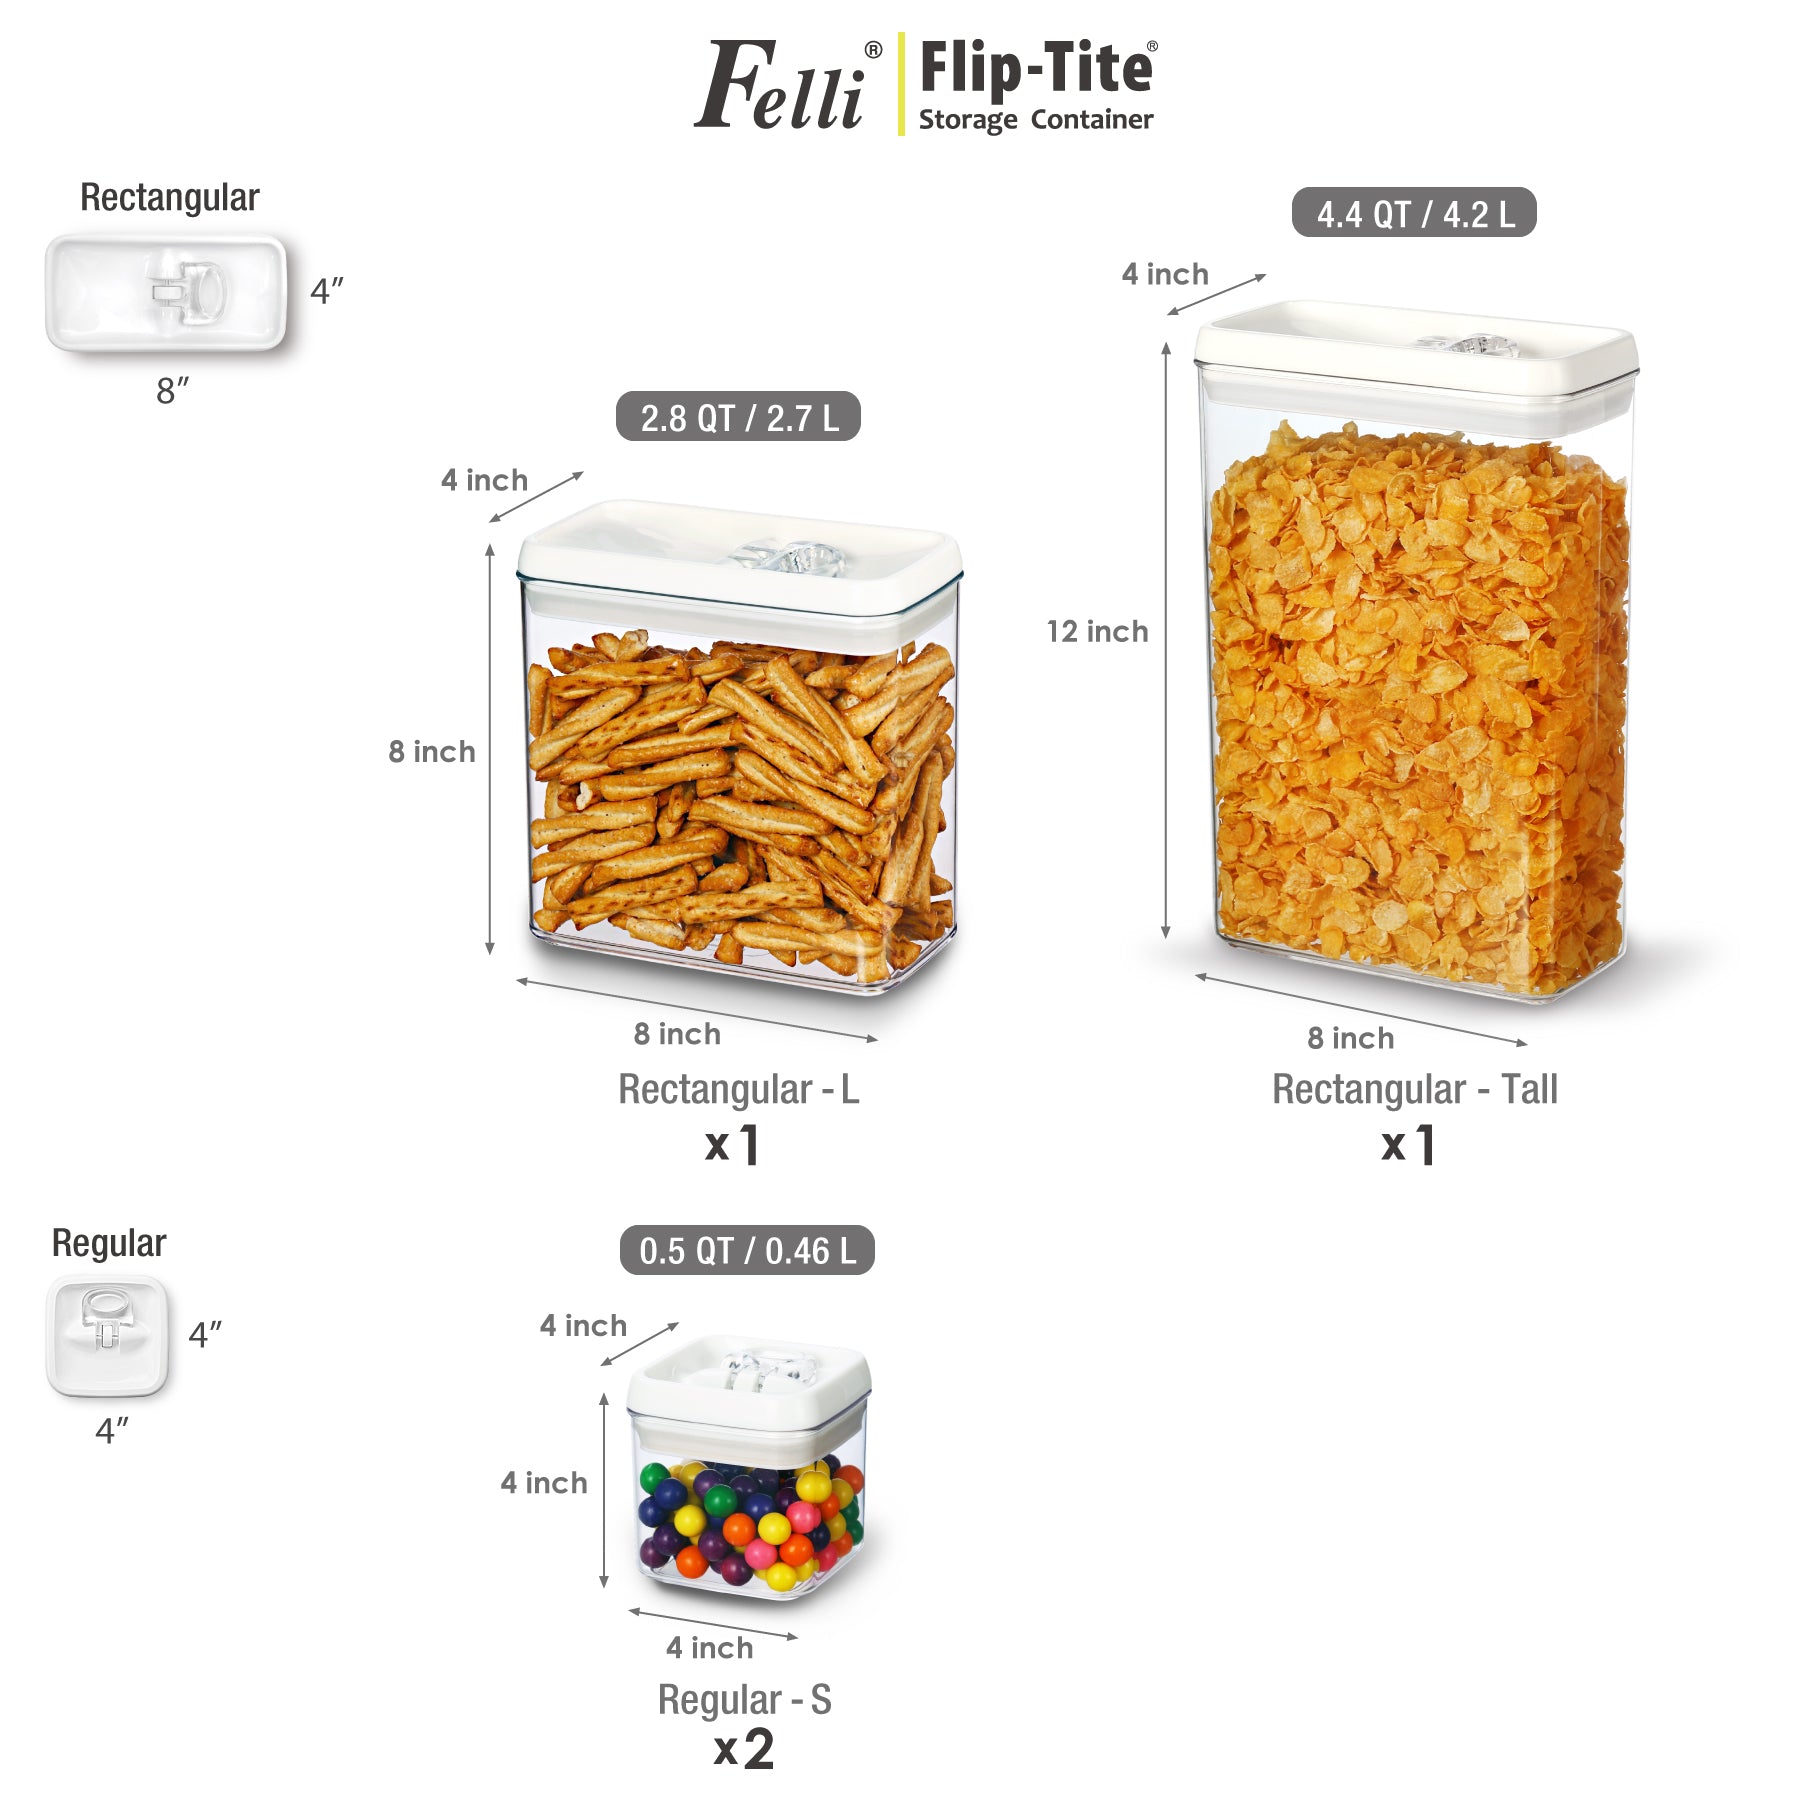 Felli Flip-Tite Storage Container Rectangular-TALL 4.4QT / 4.2L